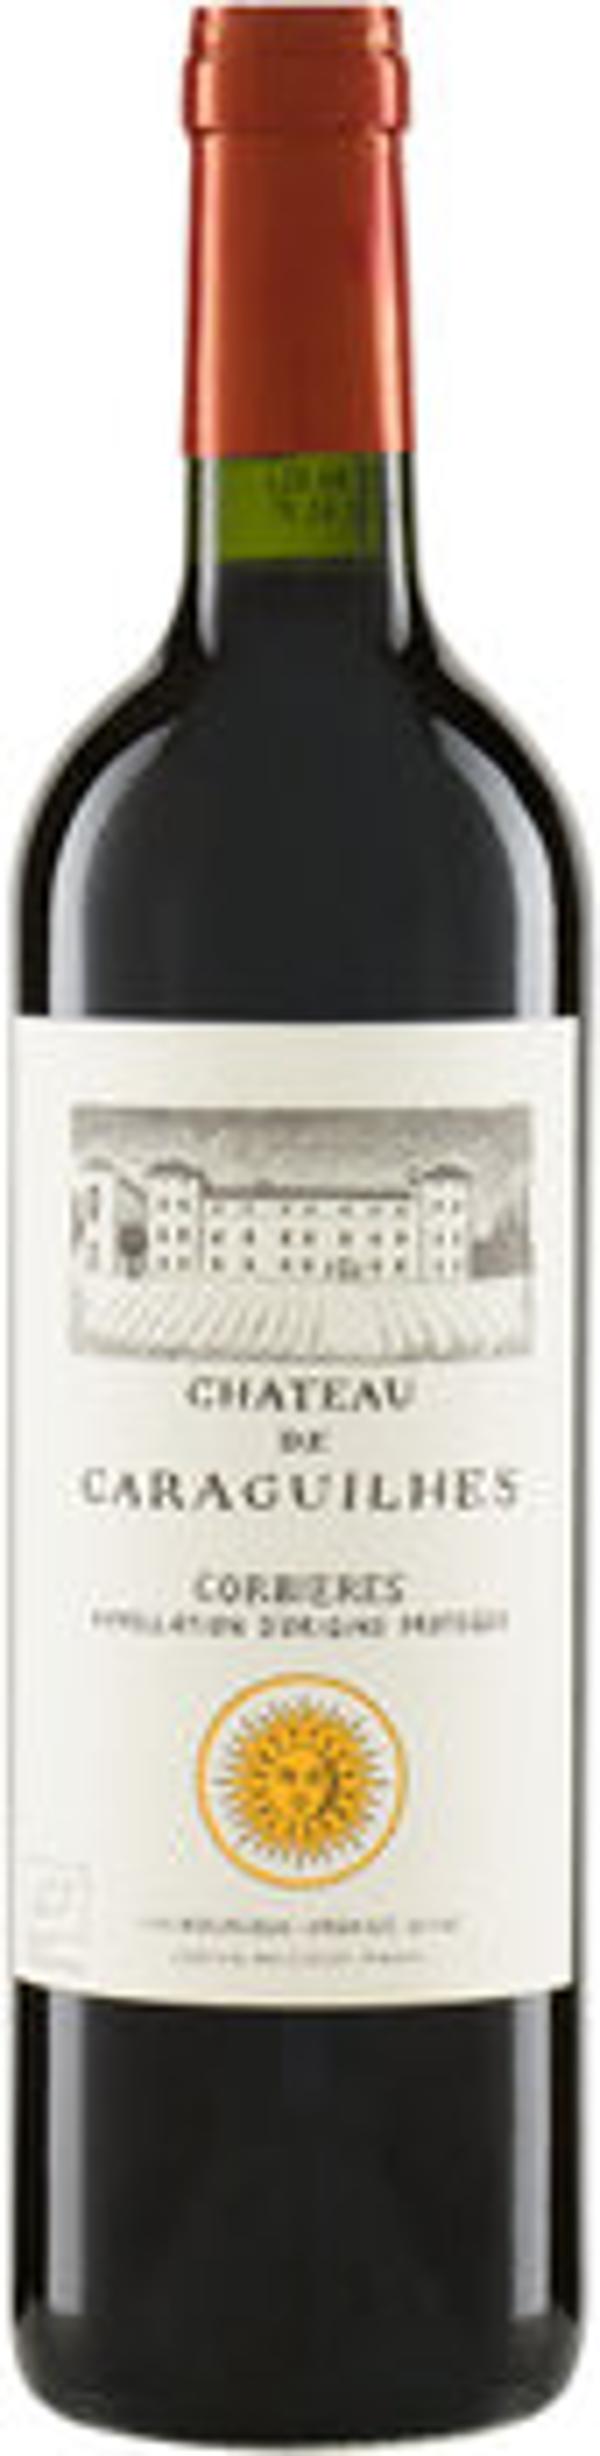 Produktfoto zu Château de Caraguilhes Corbièr